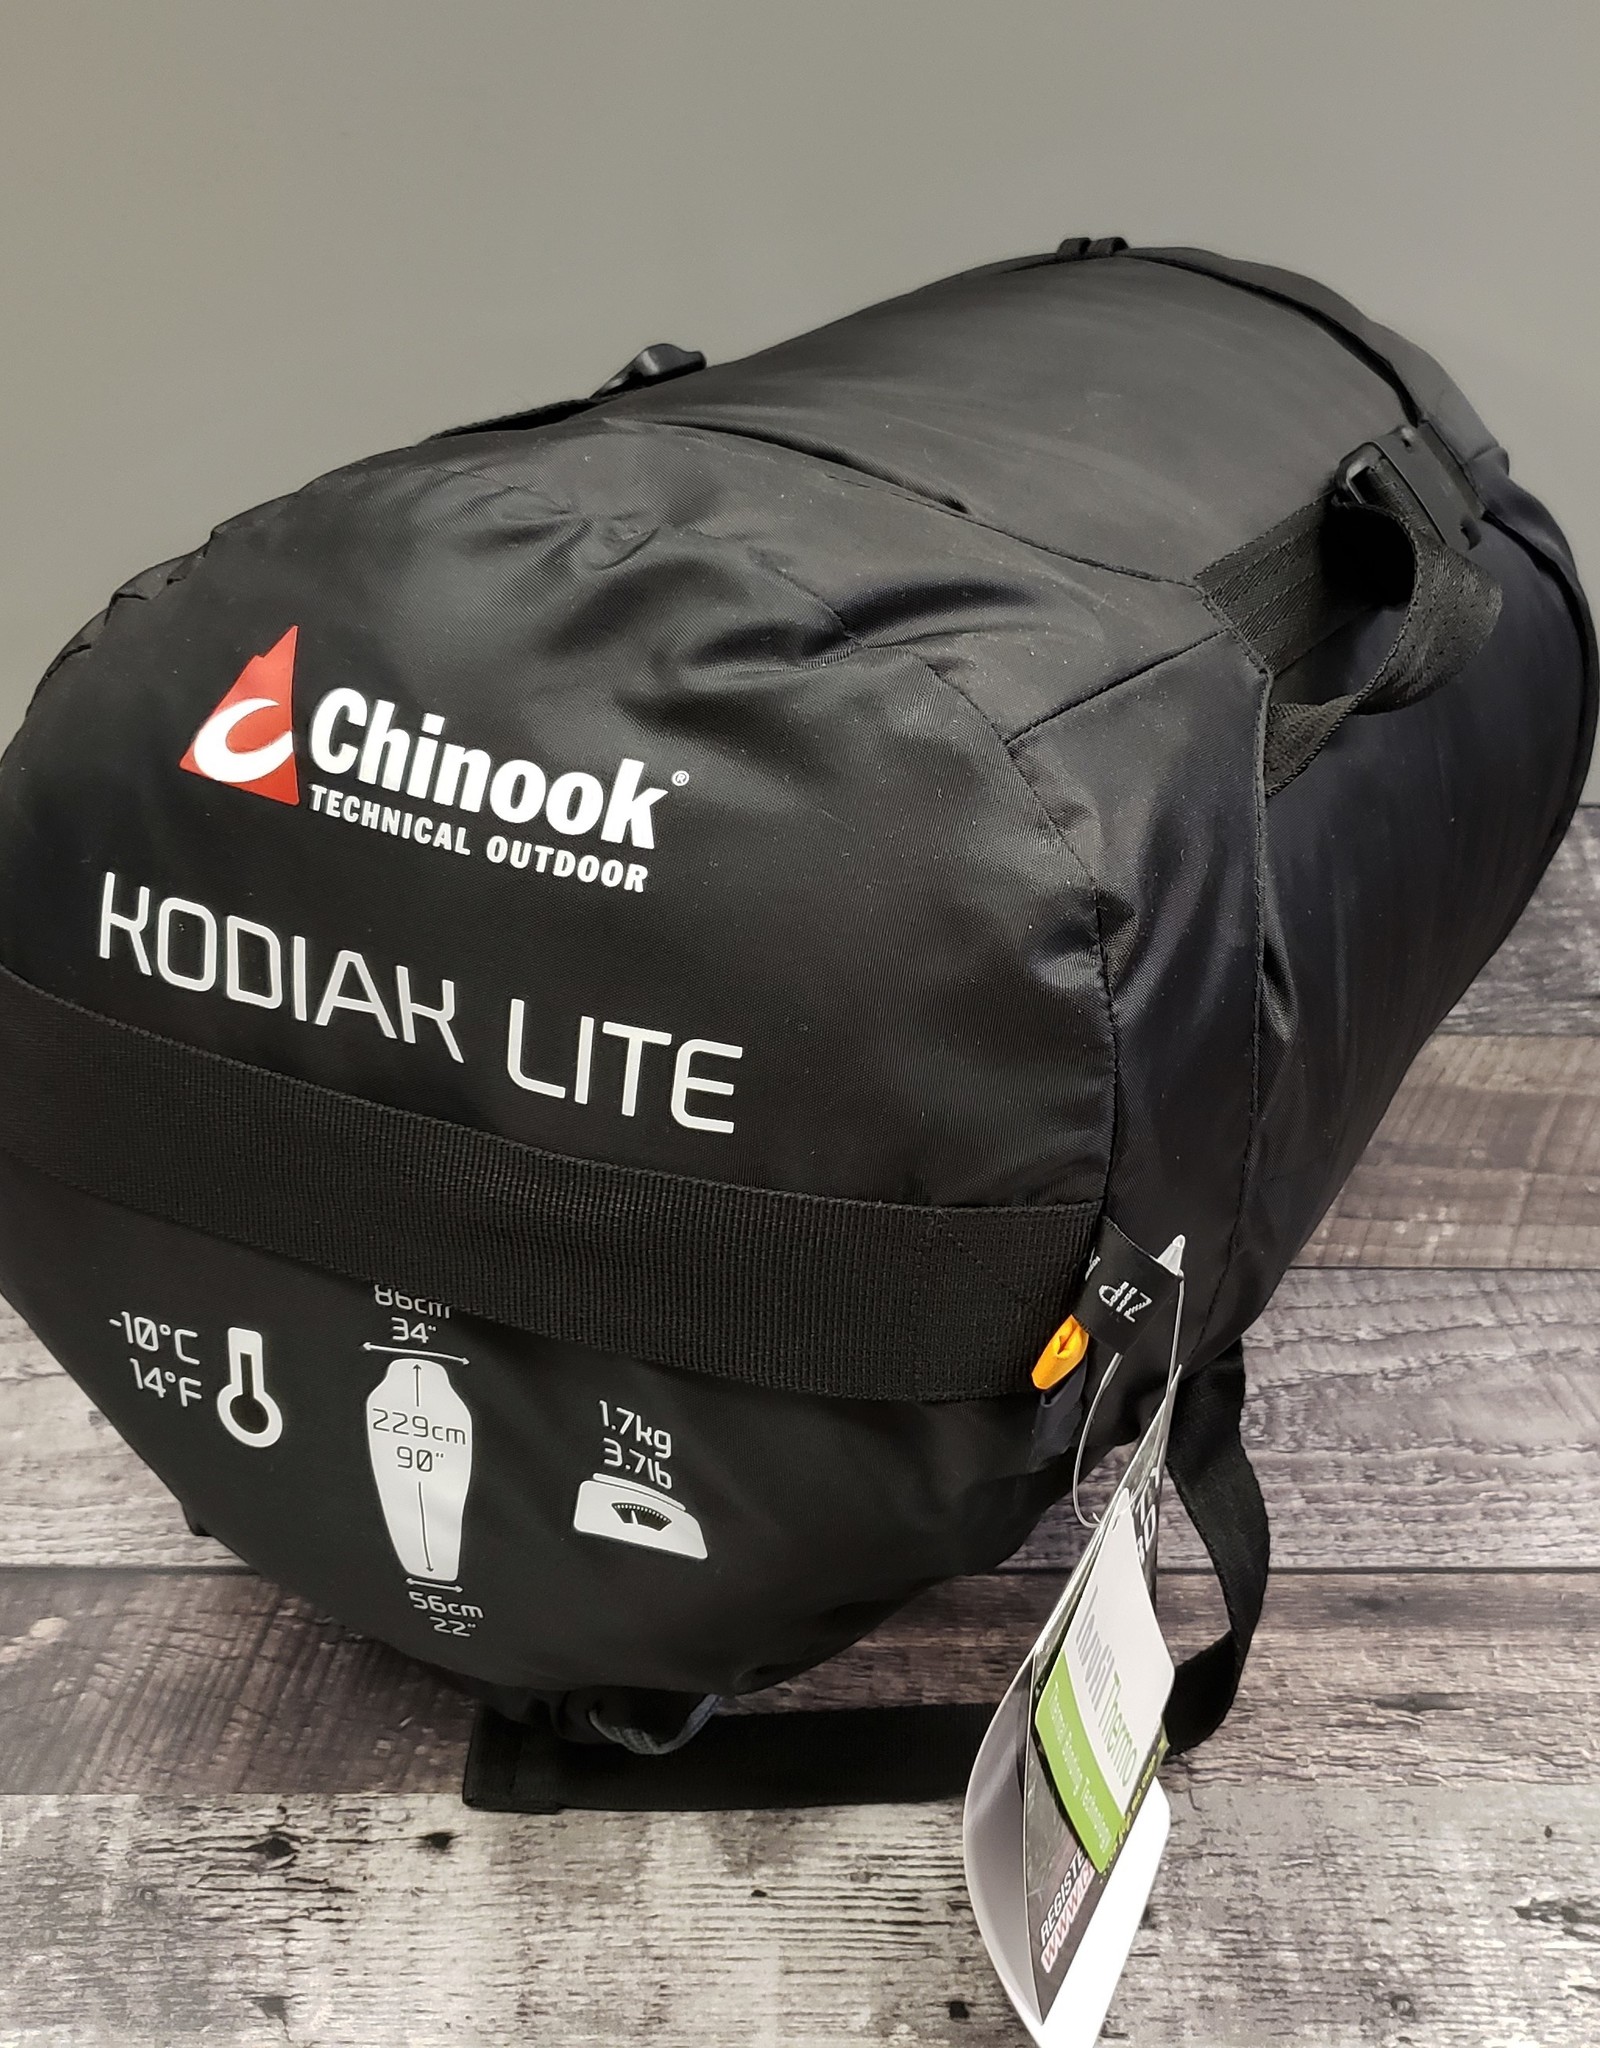 CHINOOK TECHNICAL OUTDOOR KODIAK LITE (14F/-10C) Sleeping bag 20470